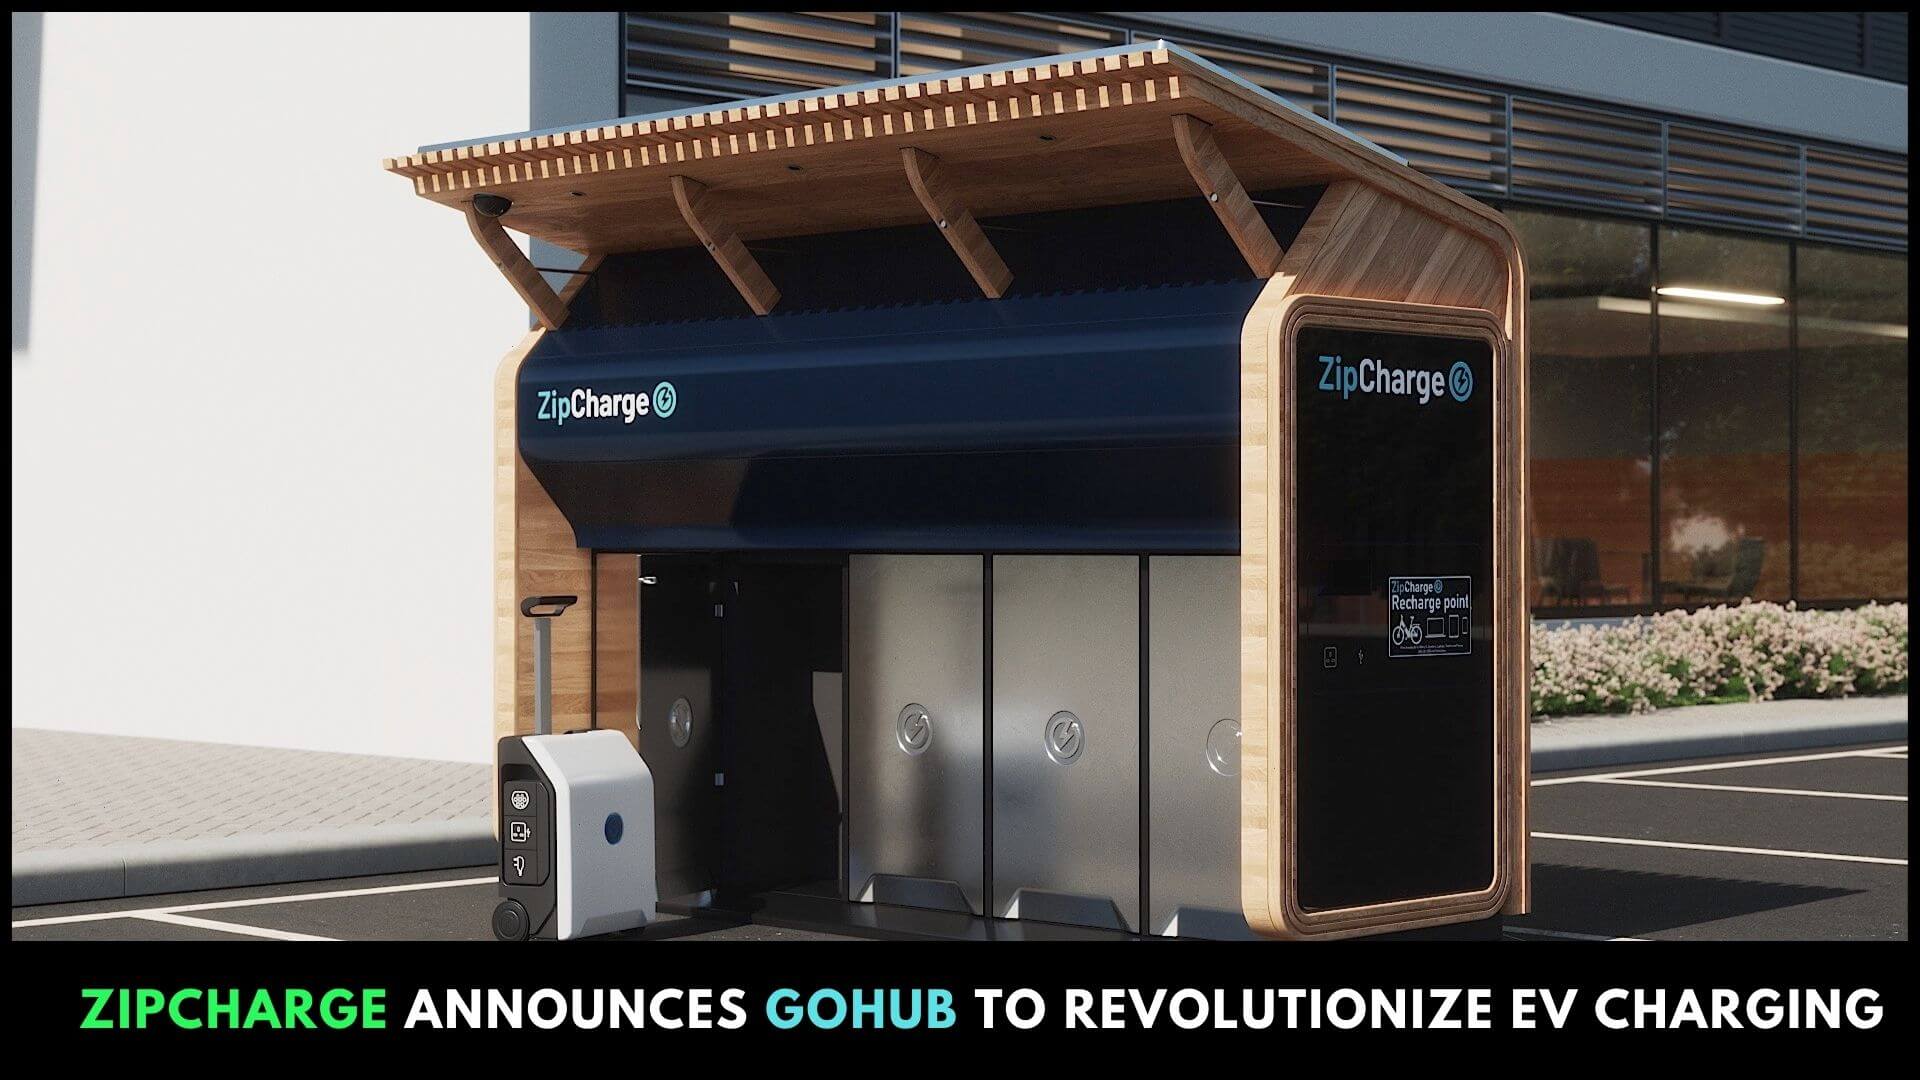 https://e-vehicleinfo.com/zipcharge-announces-gohub-to-revolutionize-ev-charging/